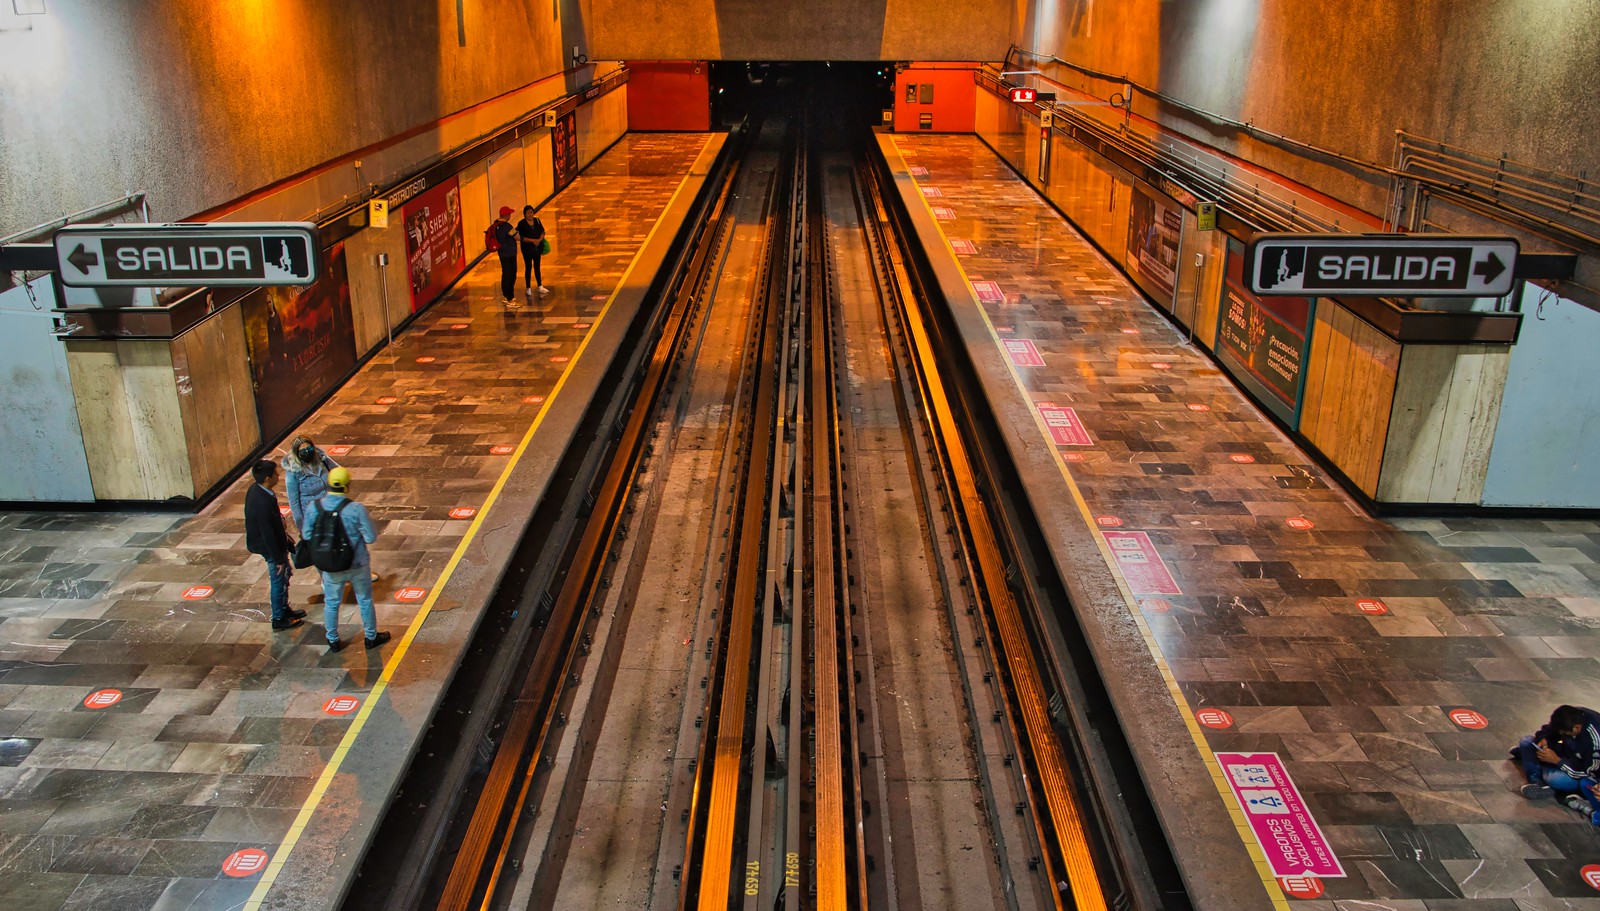 2022 - Mexico City - 104 - Patrisimo Metro Station